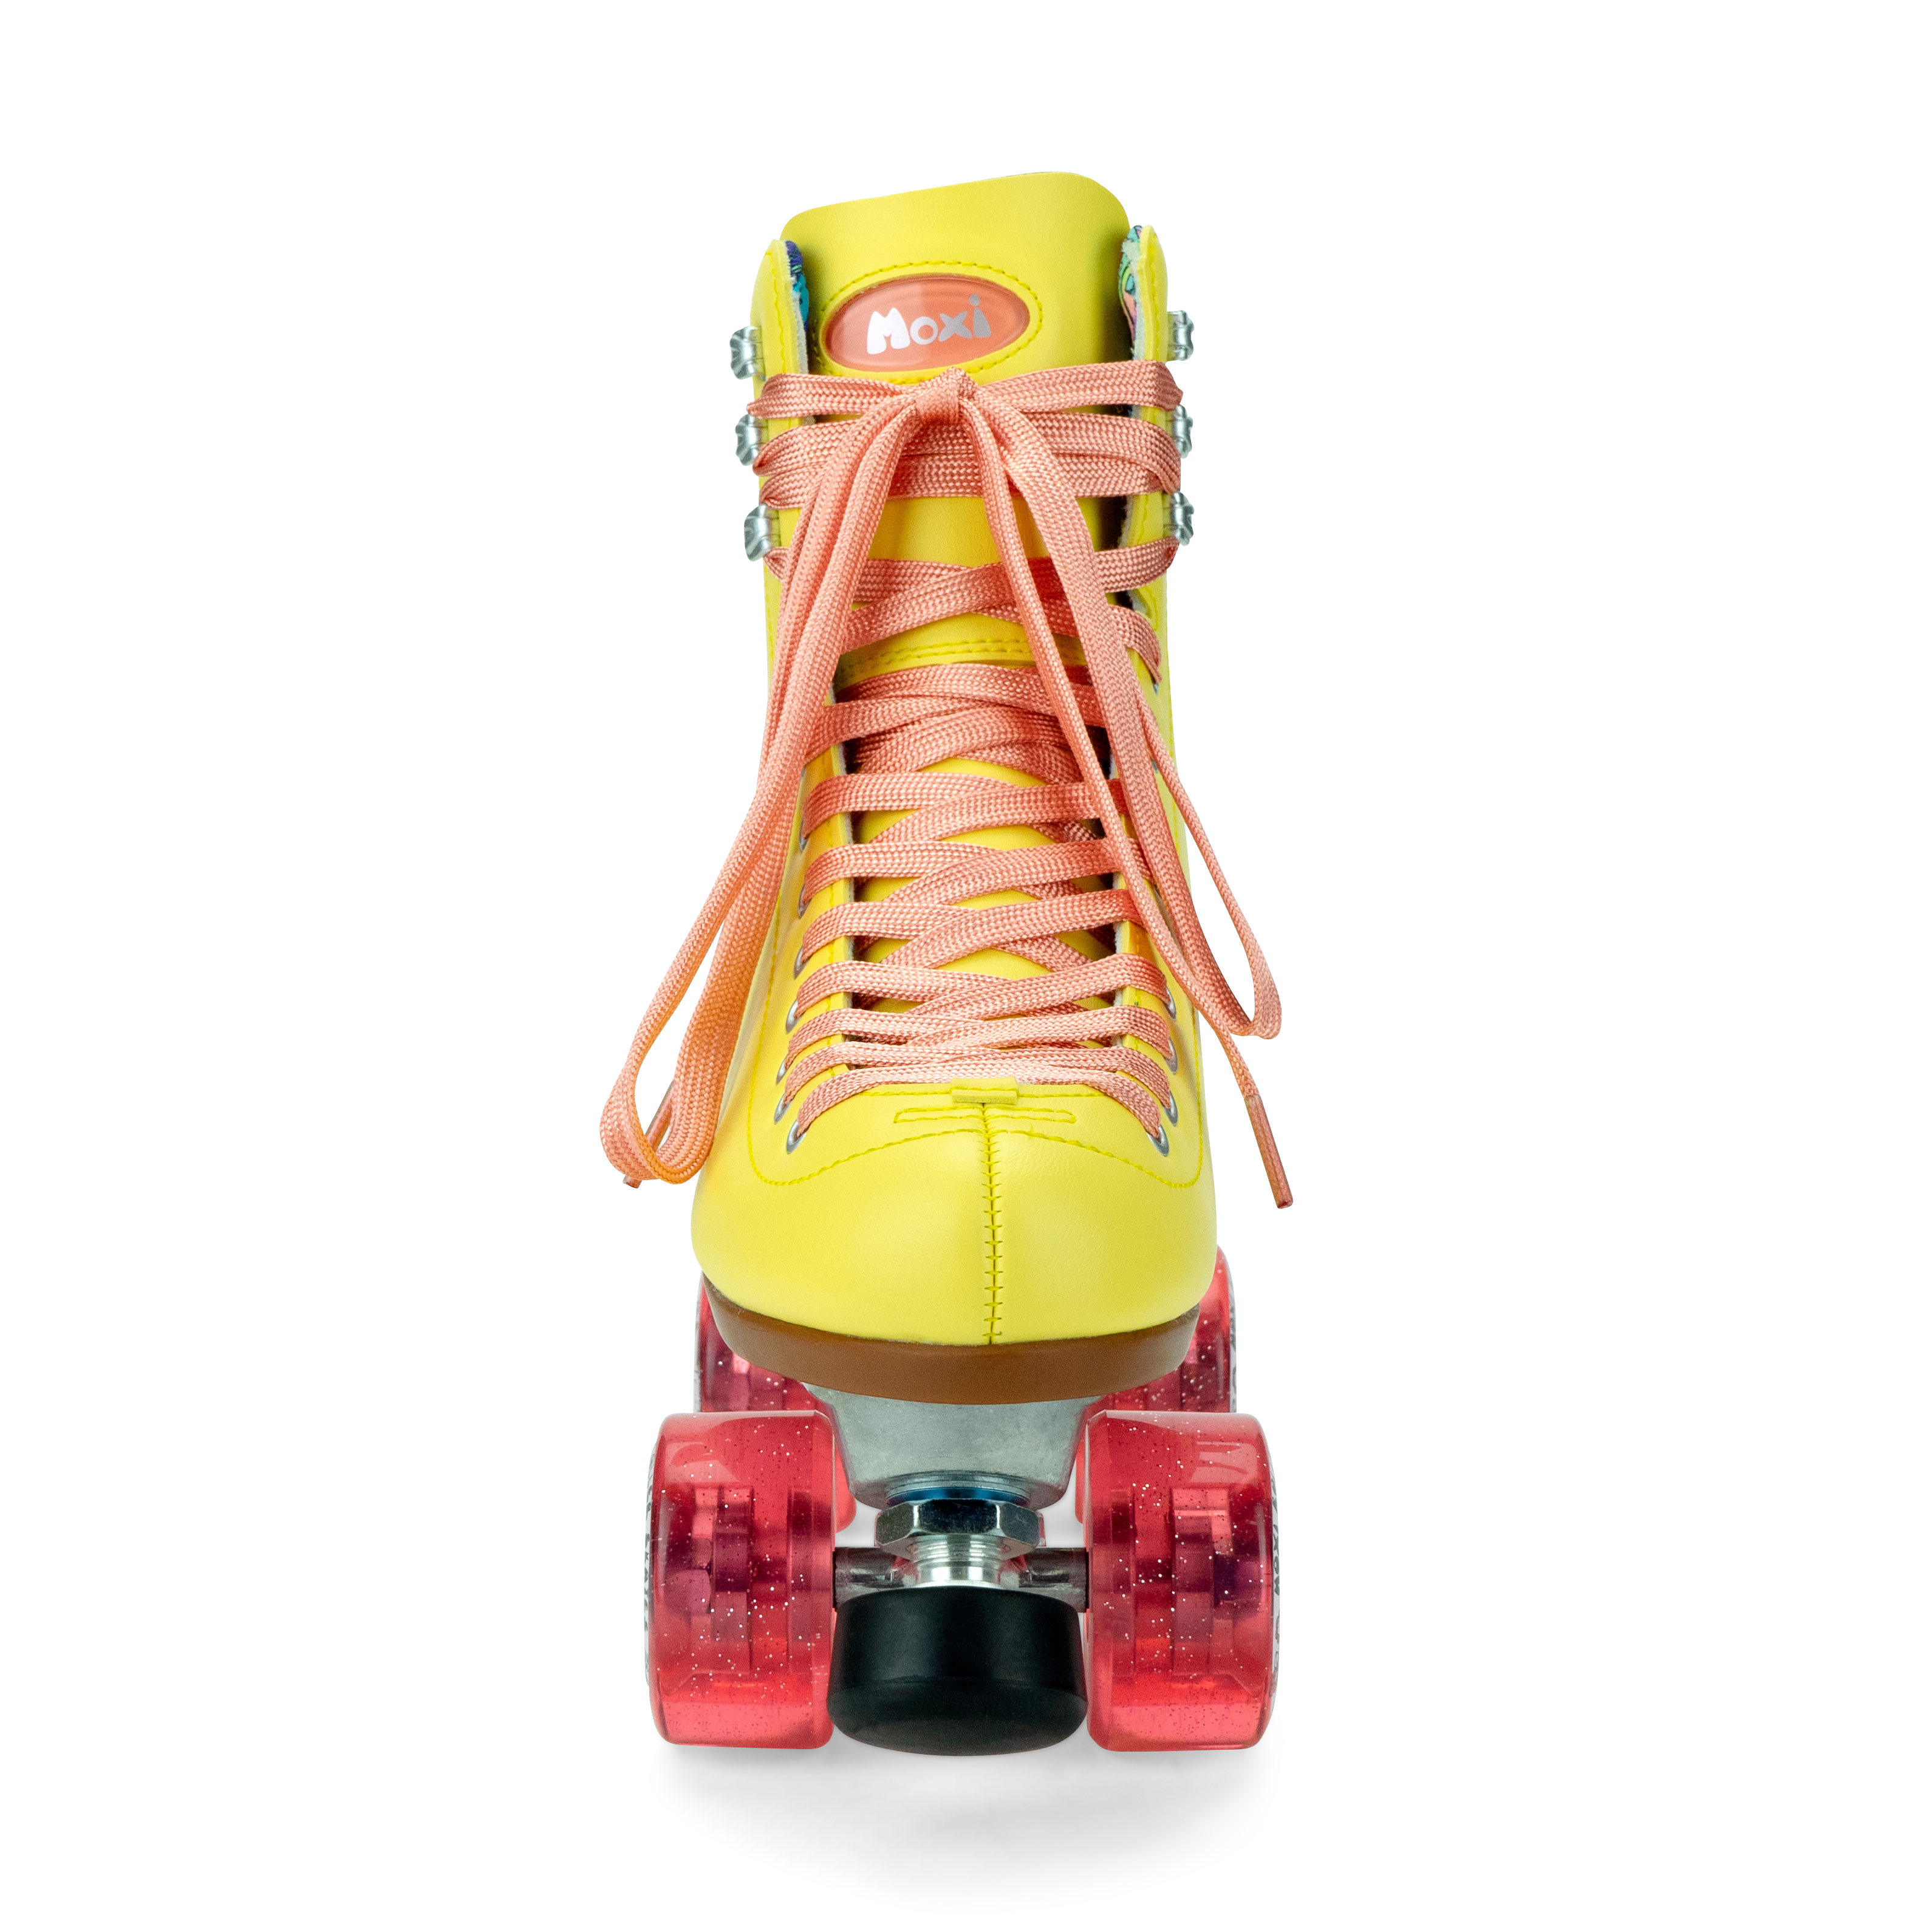 Moxi Beach Bunny Strawberry Lemonade roller skates